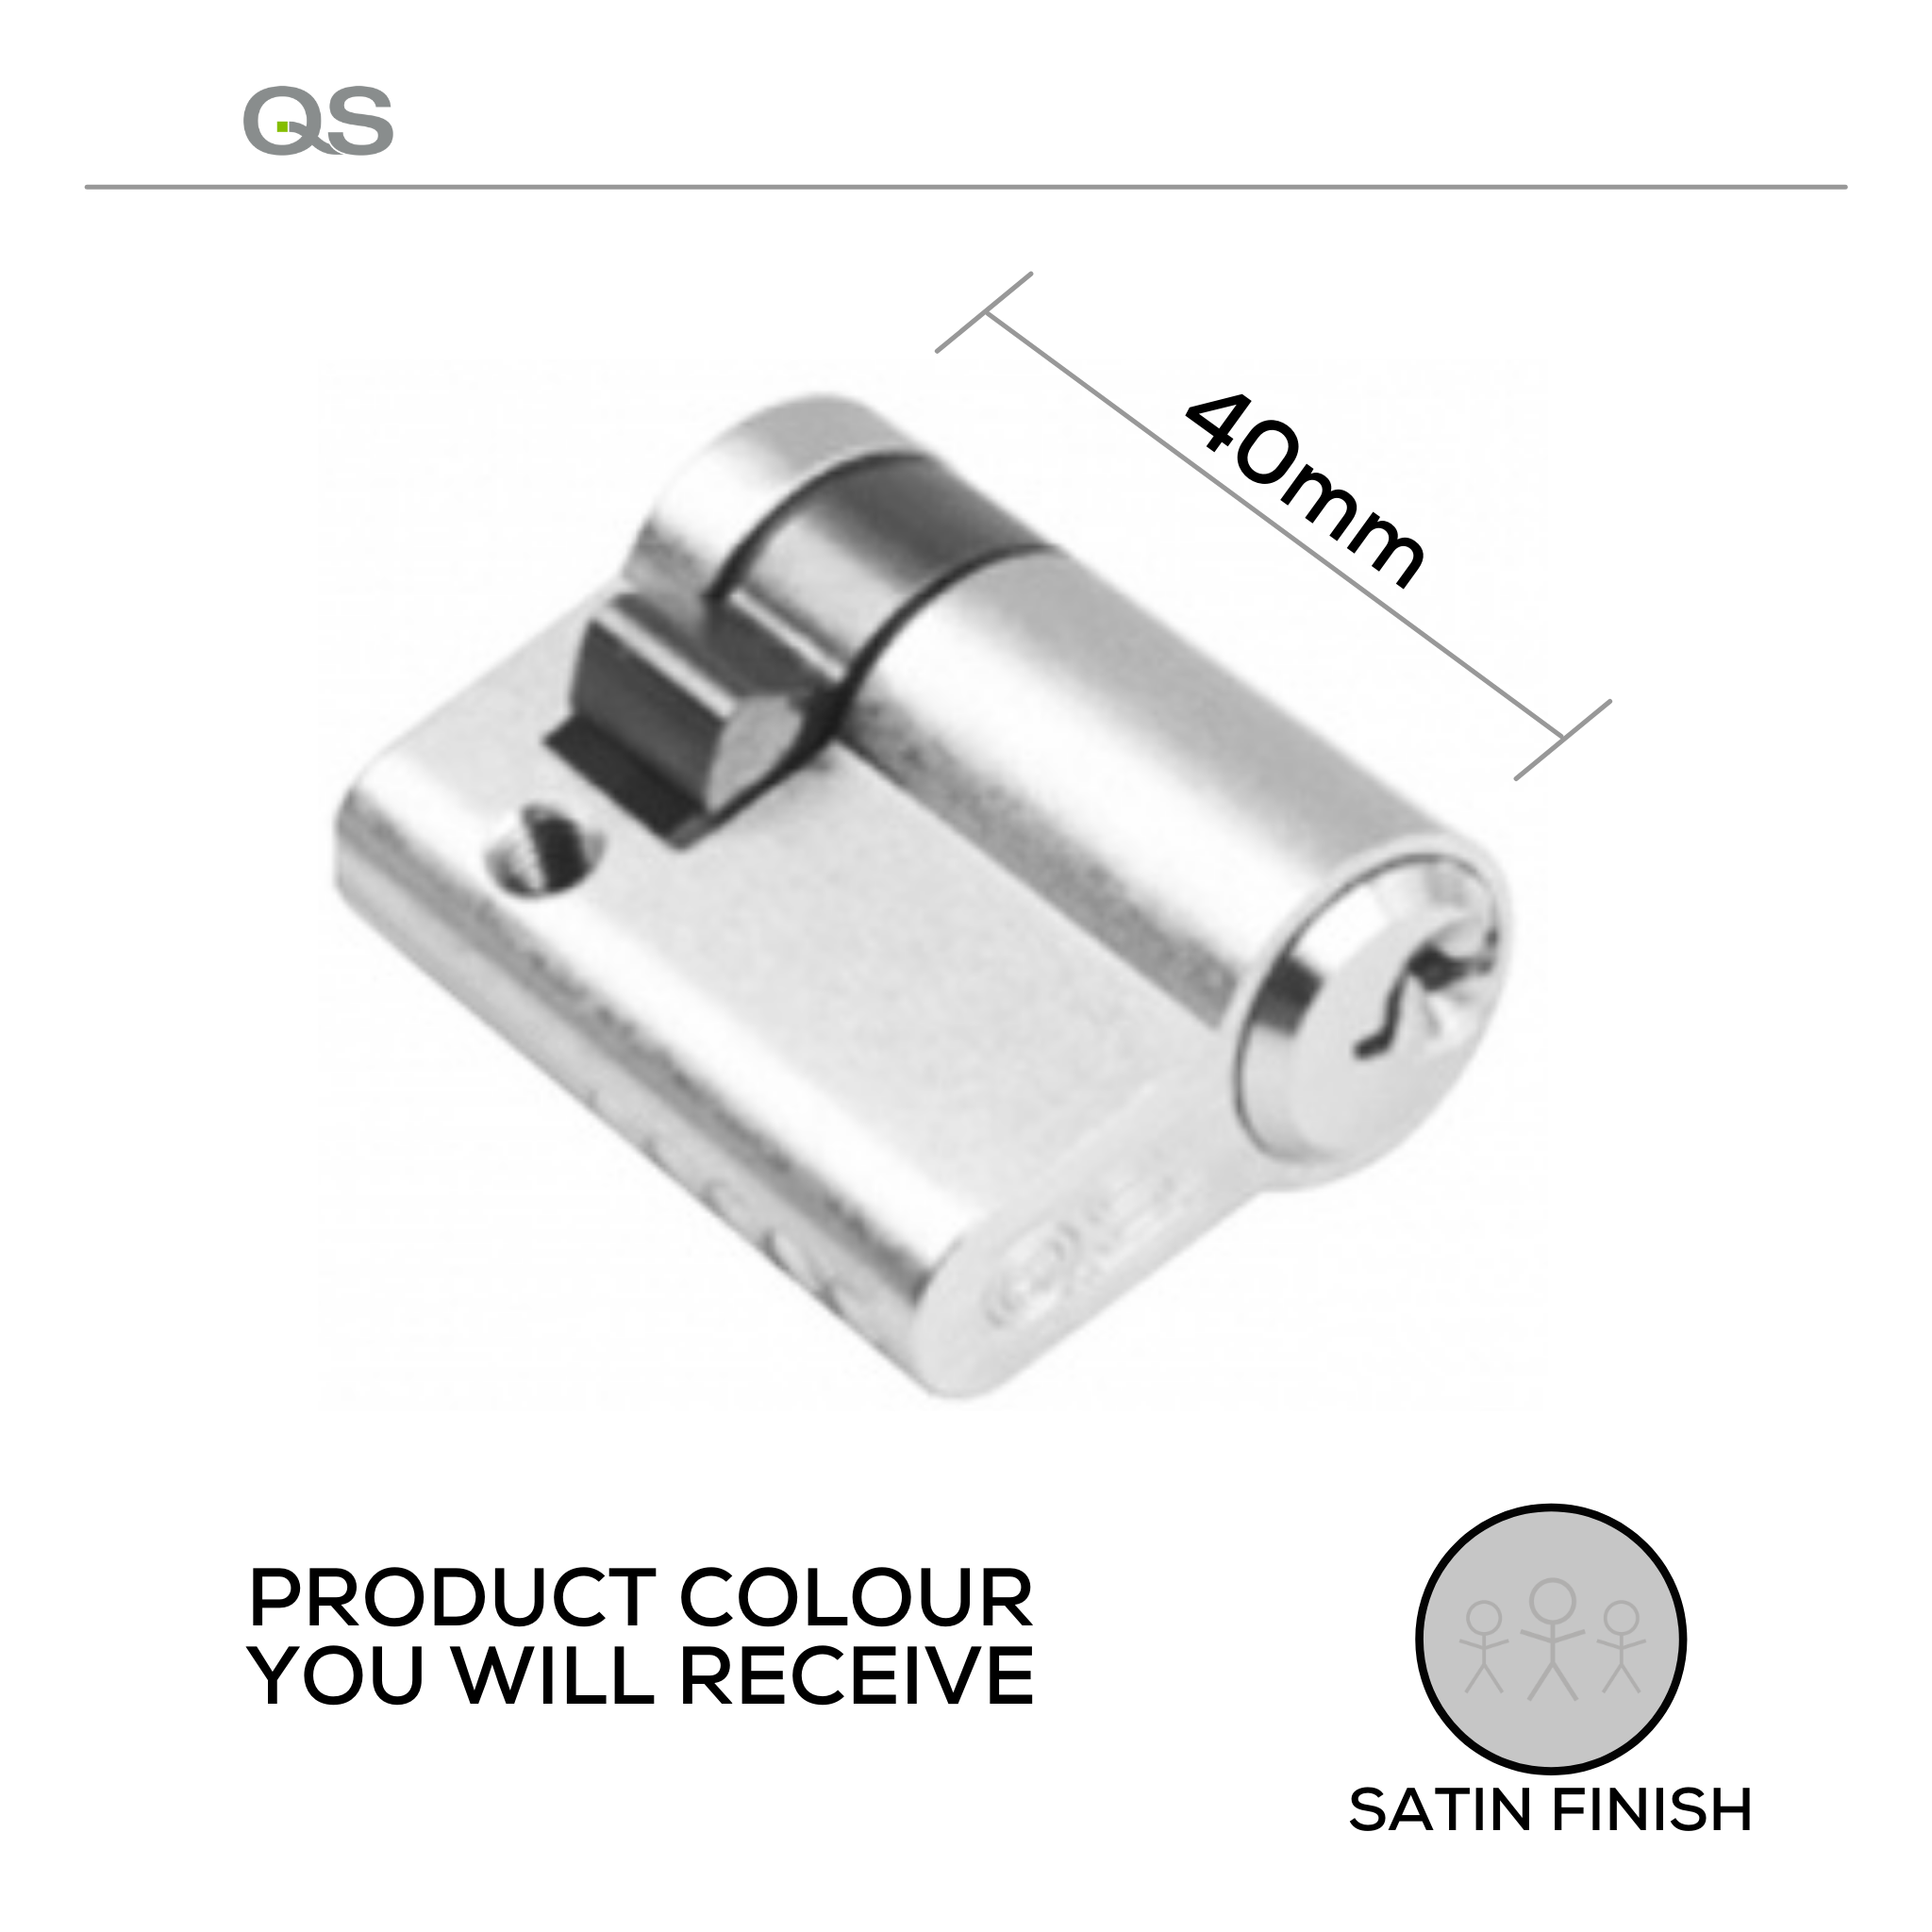 QS1102A, 40mm - 30/10, Half (Single Cylinder), Elemental, Key, Keyed to Differ (Standard), 3 Keys, 5 Pin, Aluminium Based Cylinder, Satin Finish, QS